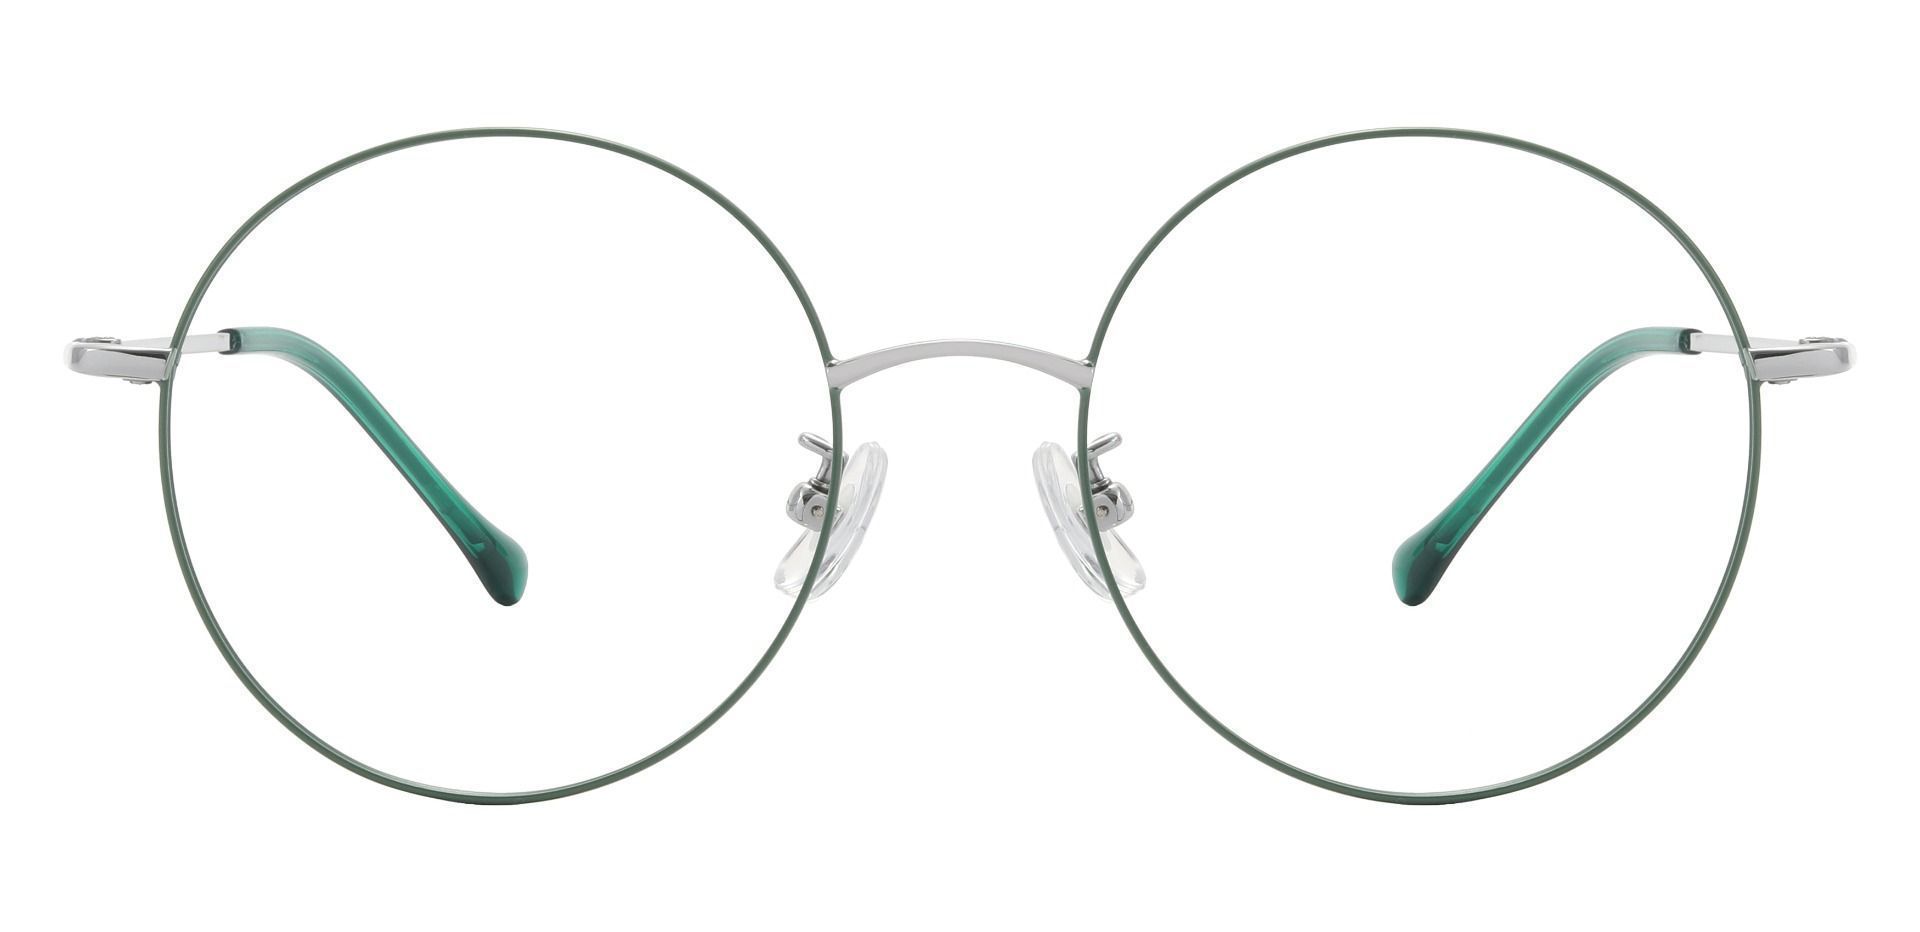 Altoona Round Prescription Glasses - Green